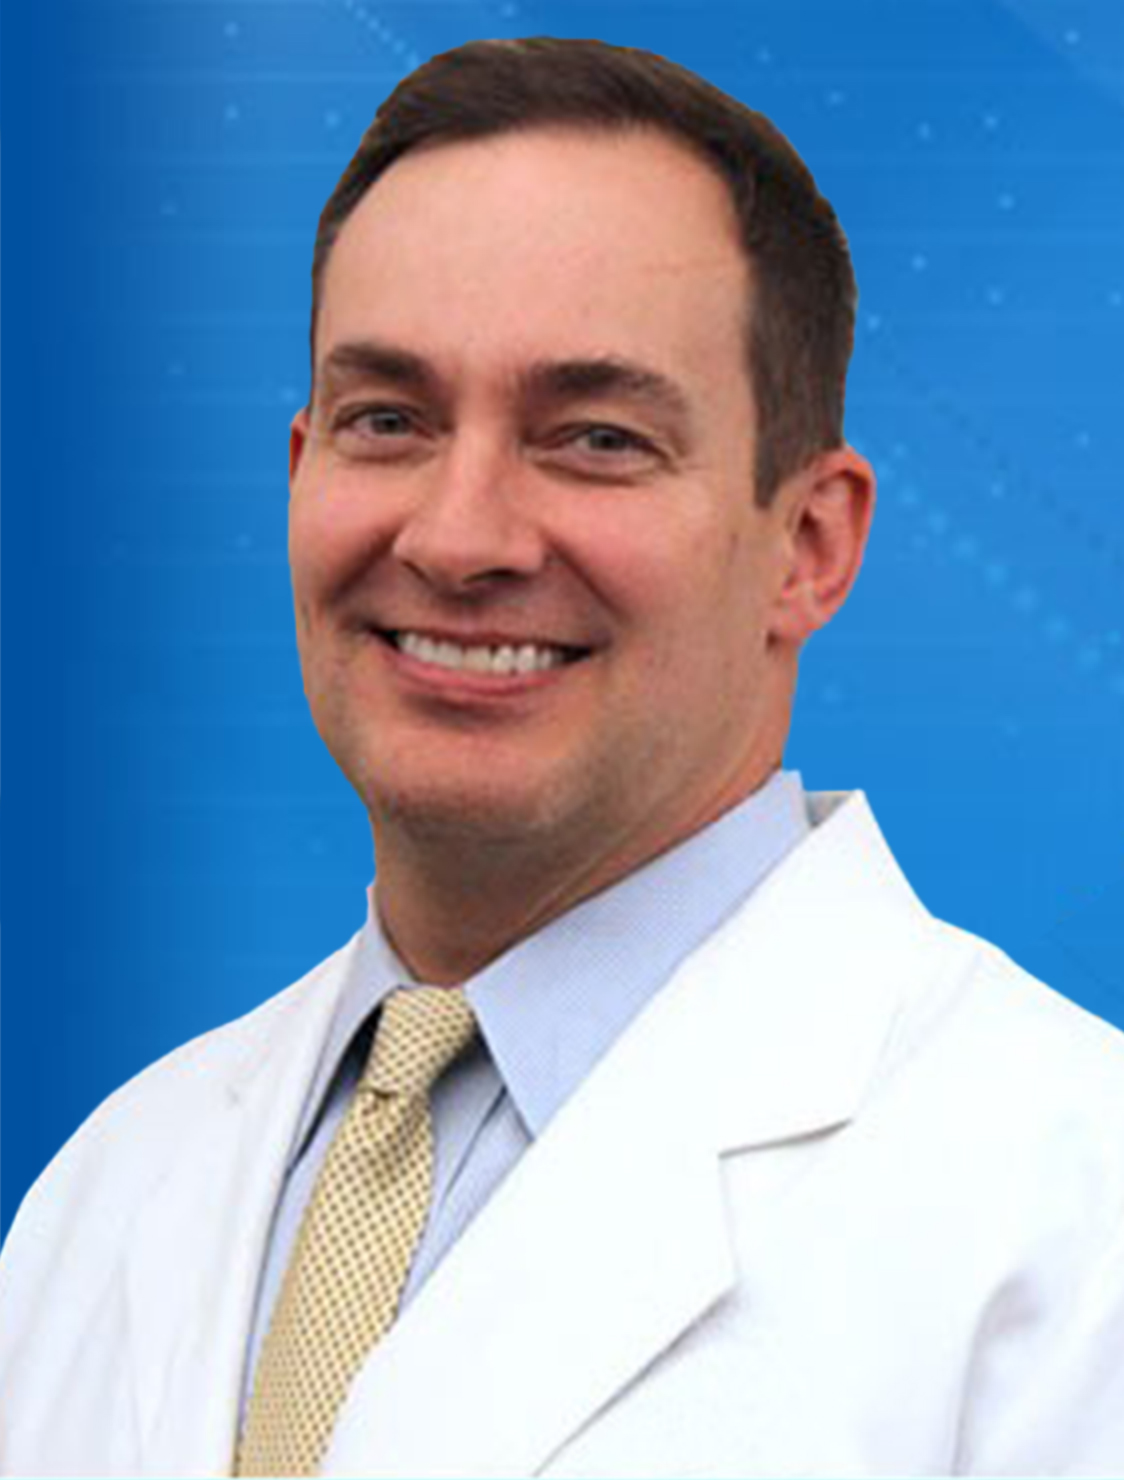 Dr. Gerard Henry, MD photo.